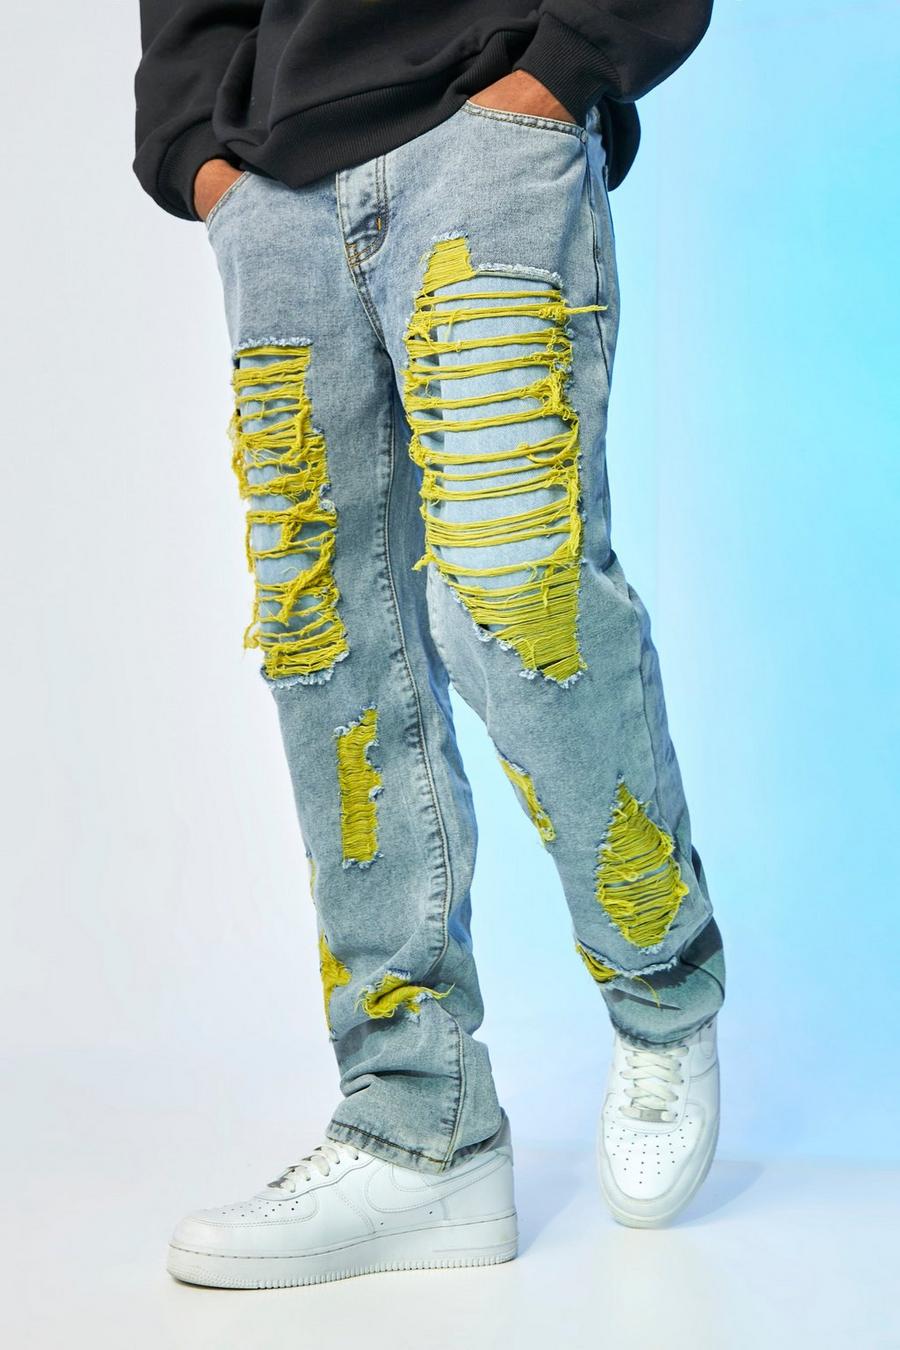 Lockere, extrem zerrissene Jeans in gelb+O1295, Ice blue